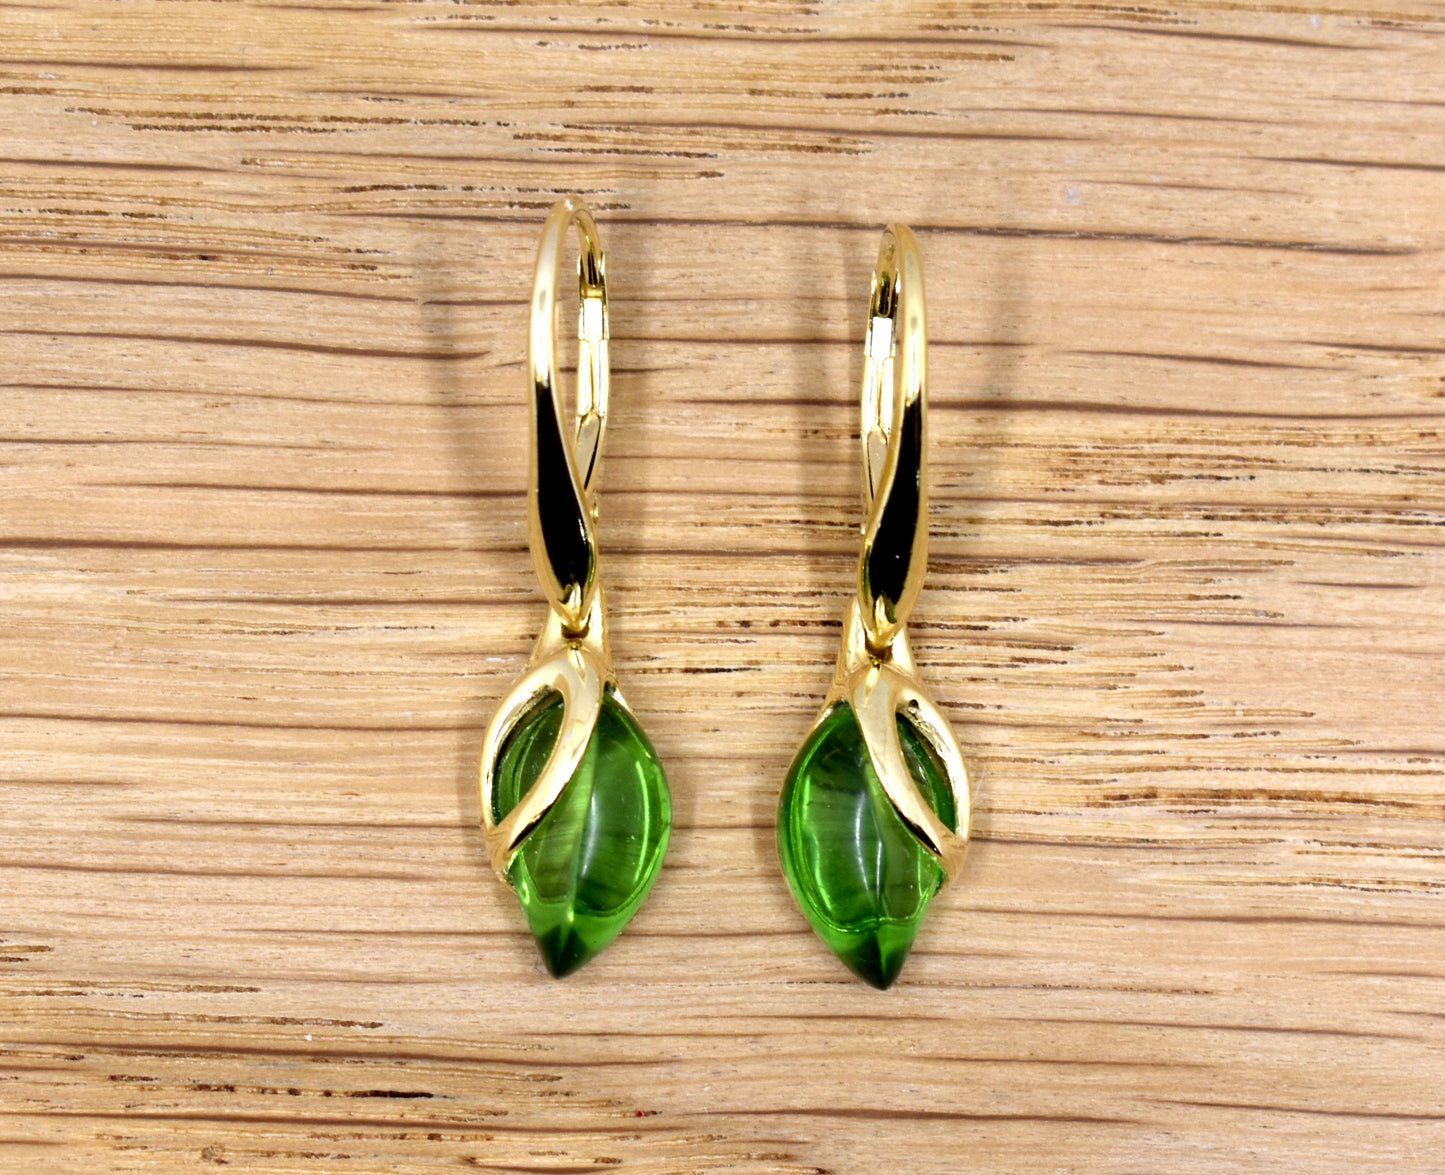 Caribbean amber earrings